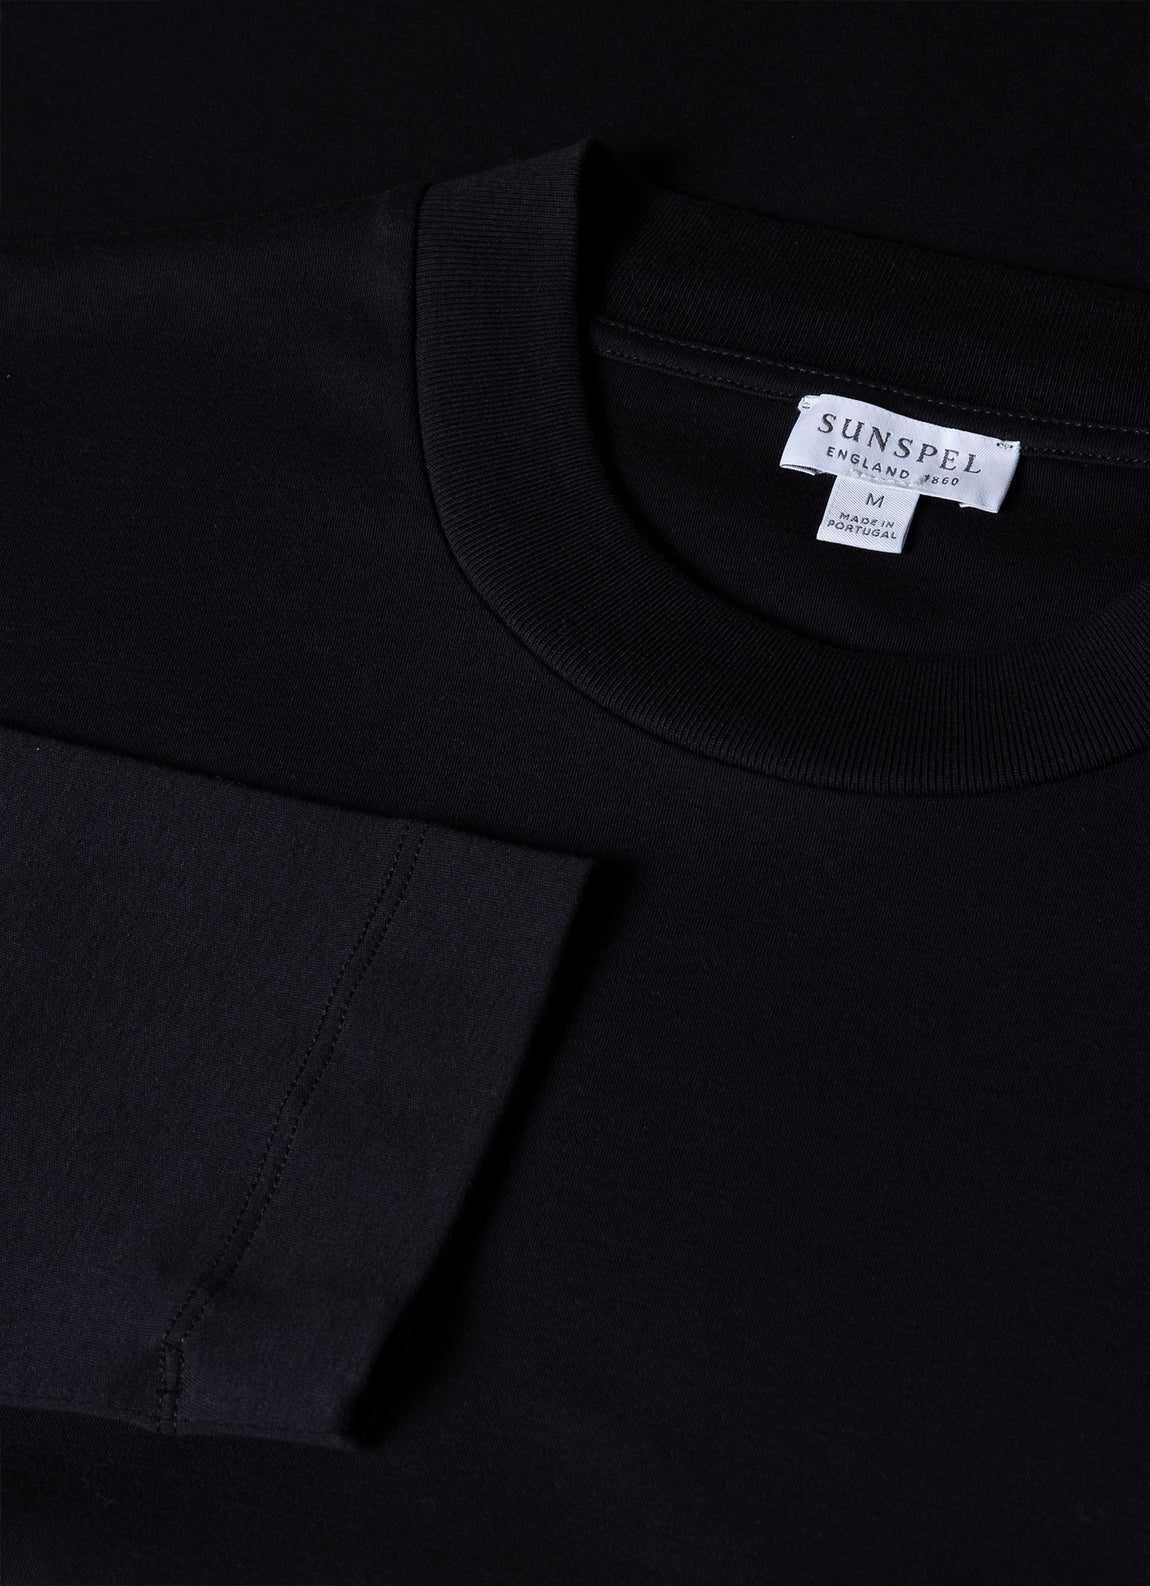 Men's Long Sleeve Heavyweight T-shirt in Black | Sunspel